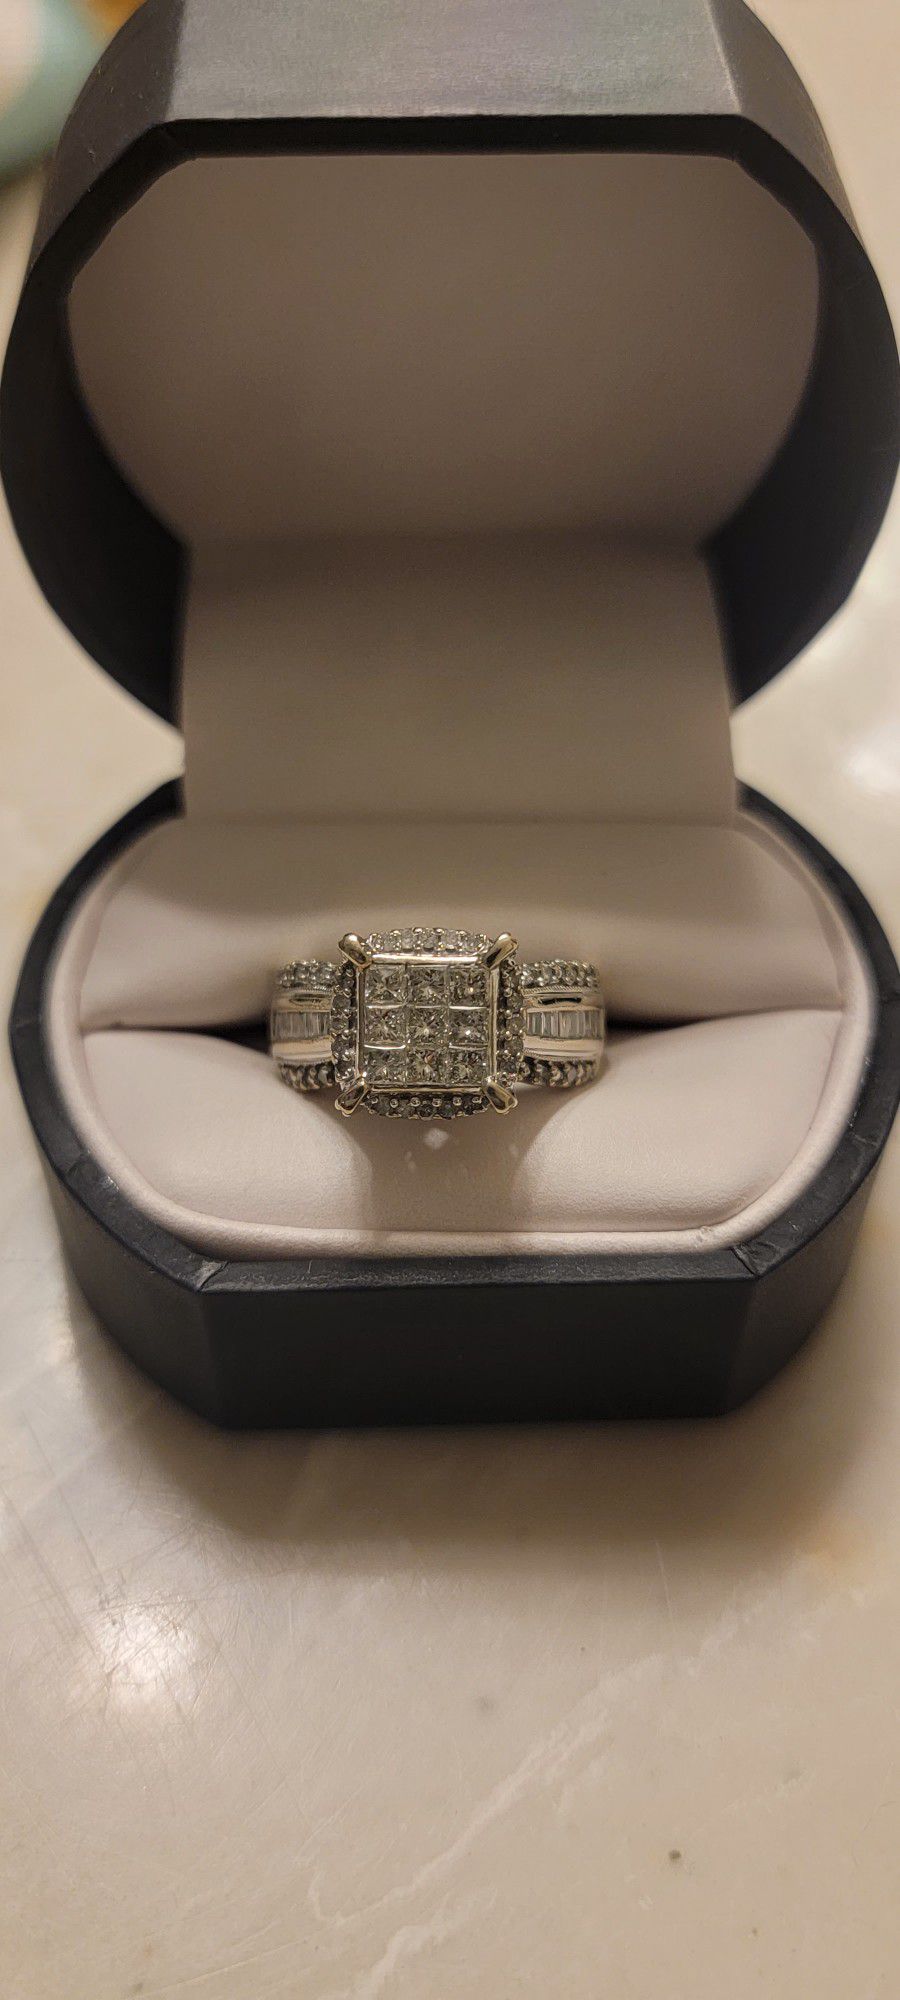 Engagement/wedding Ring